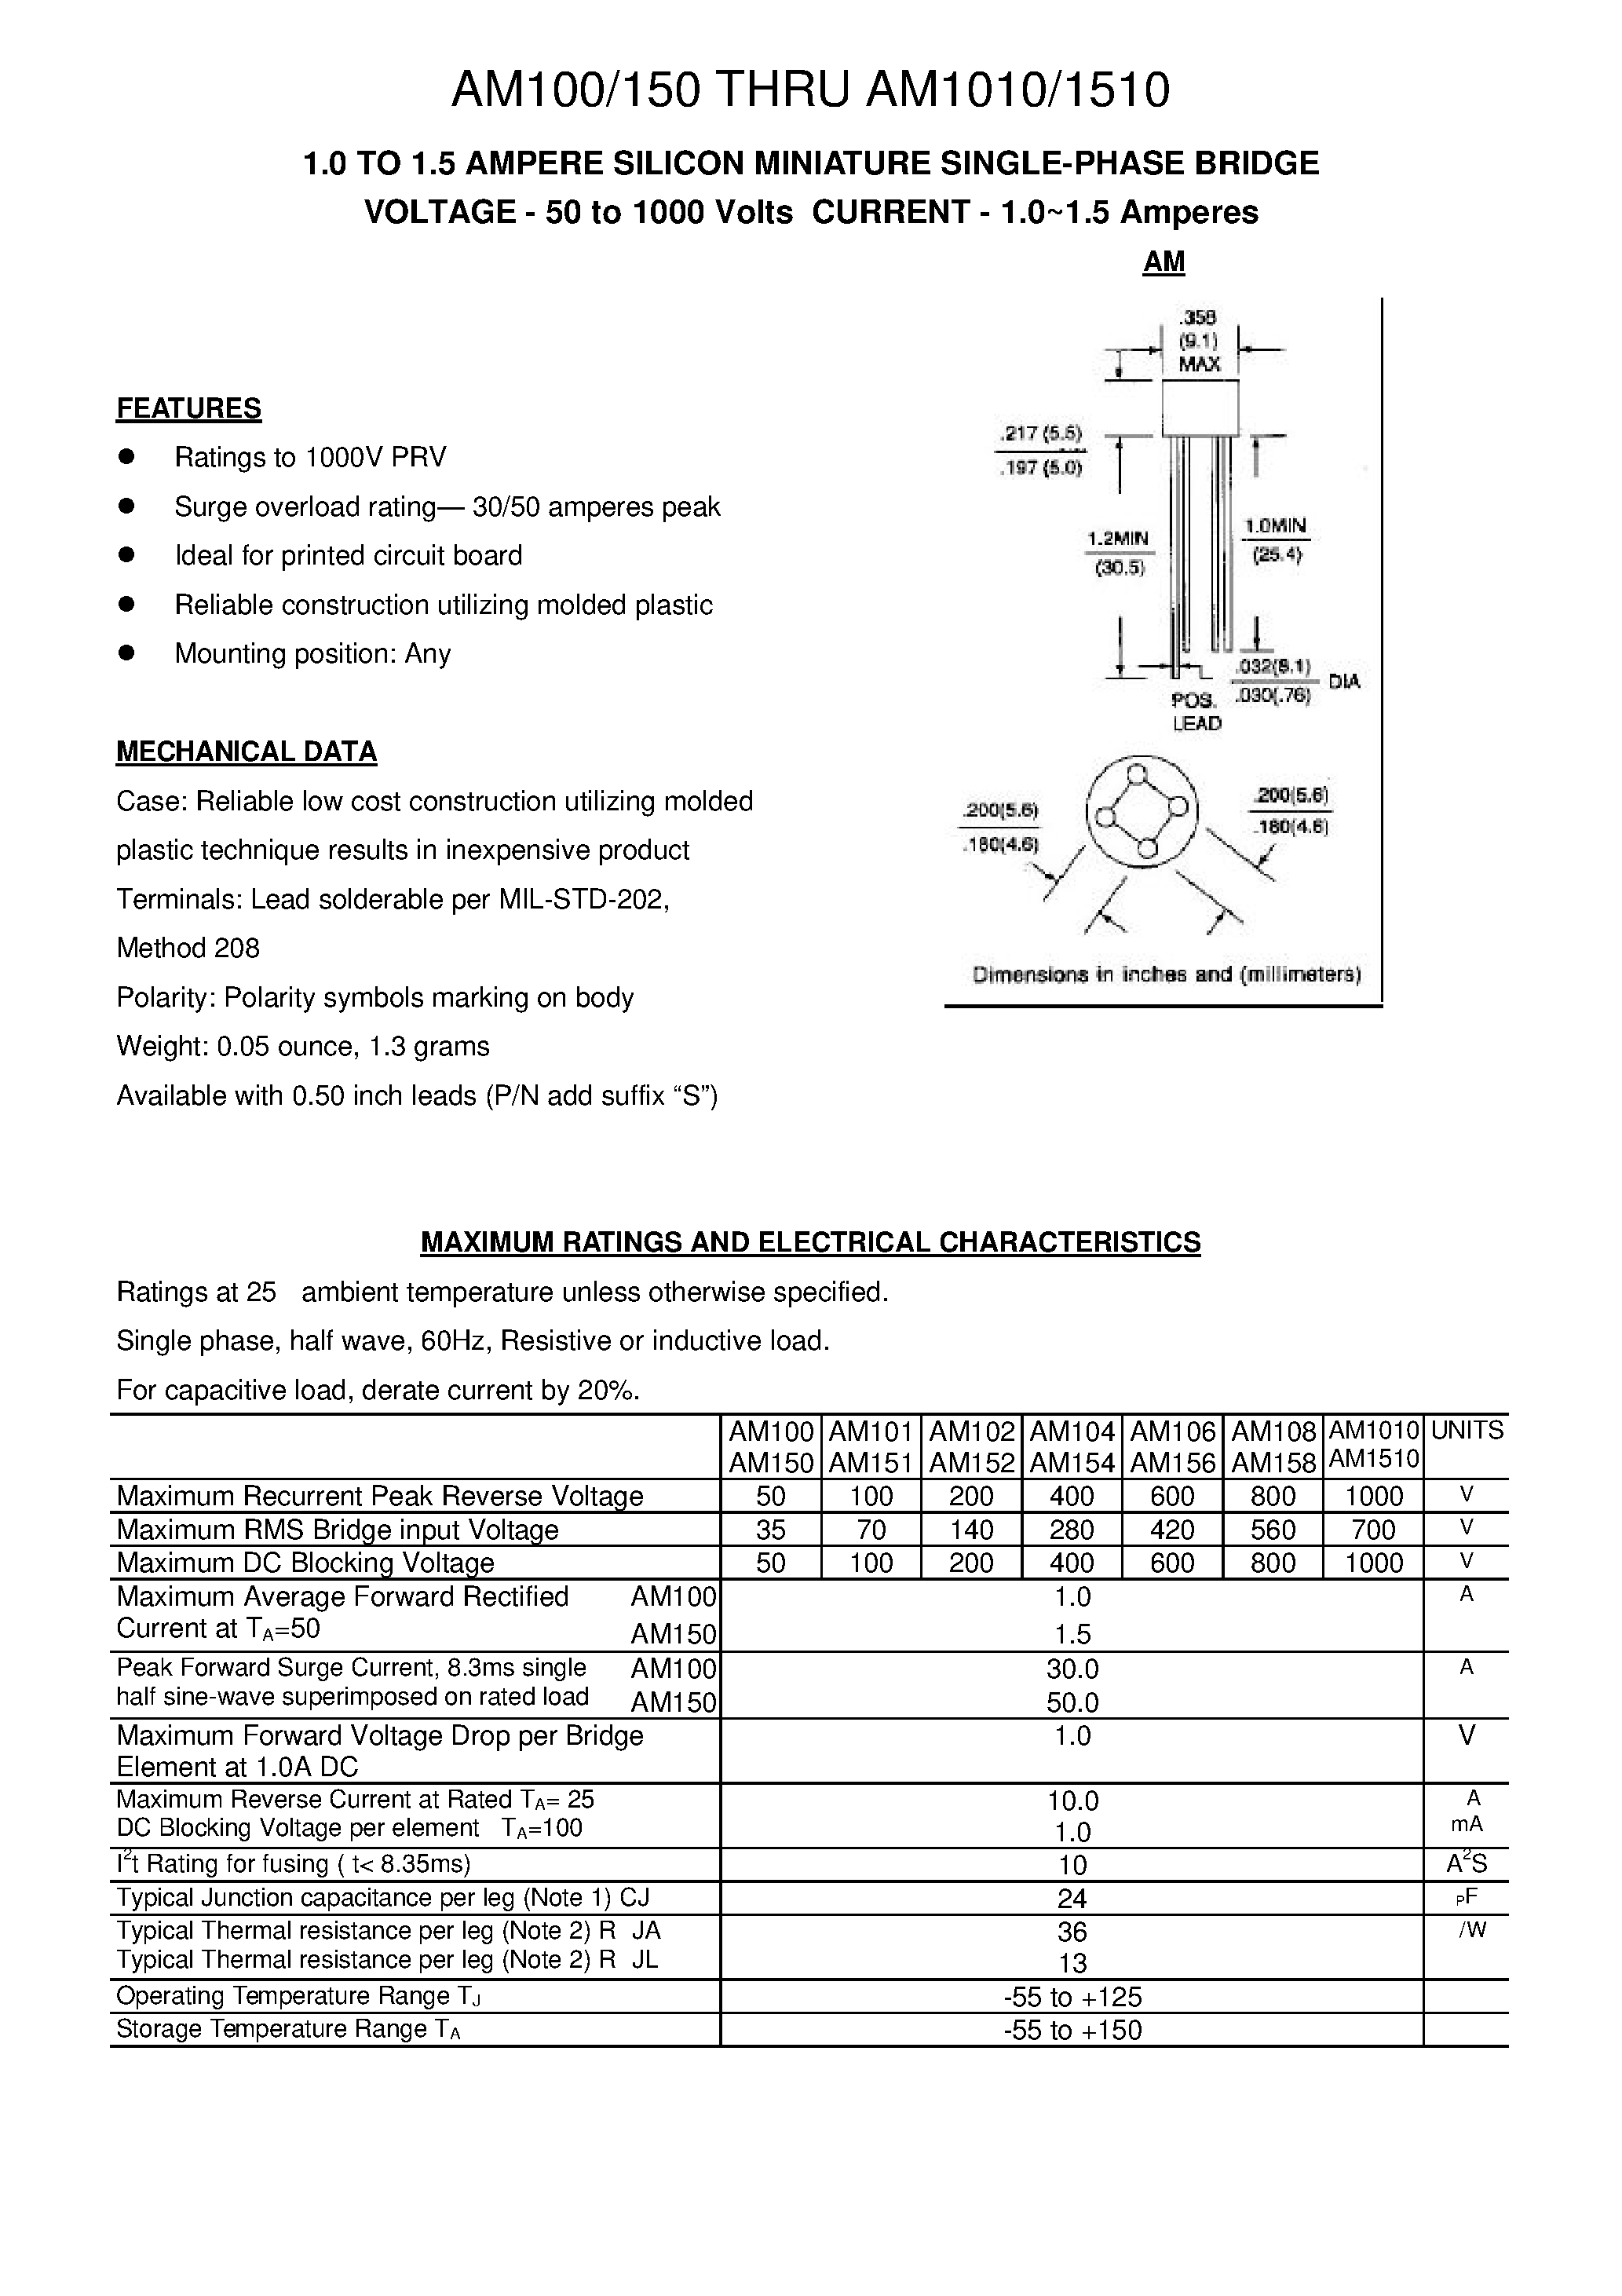 Datasheet AM100 - 1.0 TO 1.5 AMPERE SILICON MINIATURE SINGLE-PHASE BRIDGE page 1